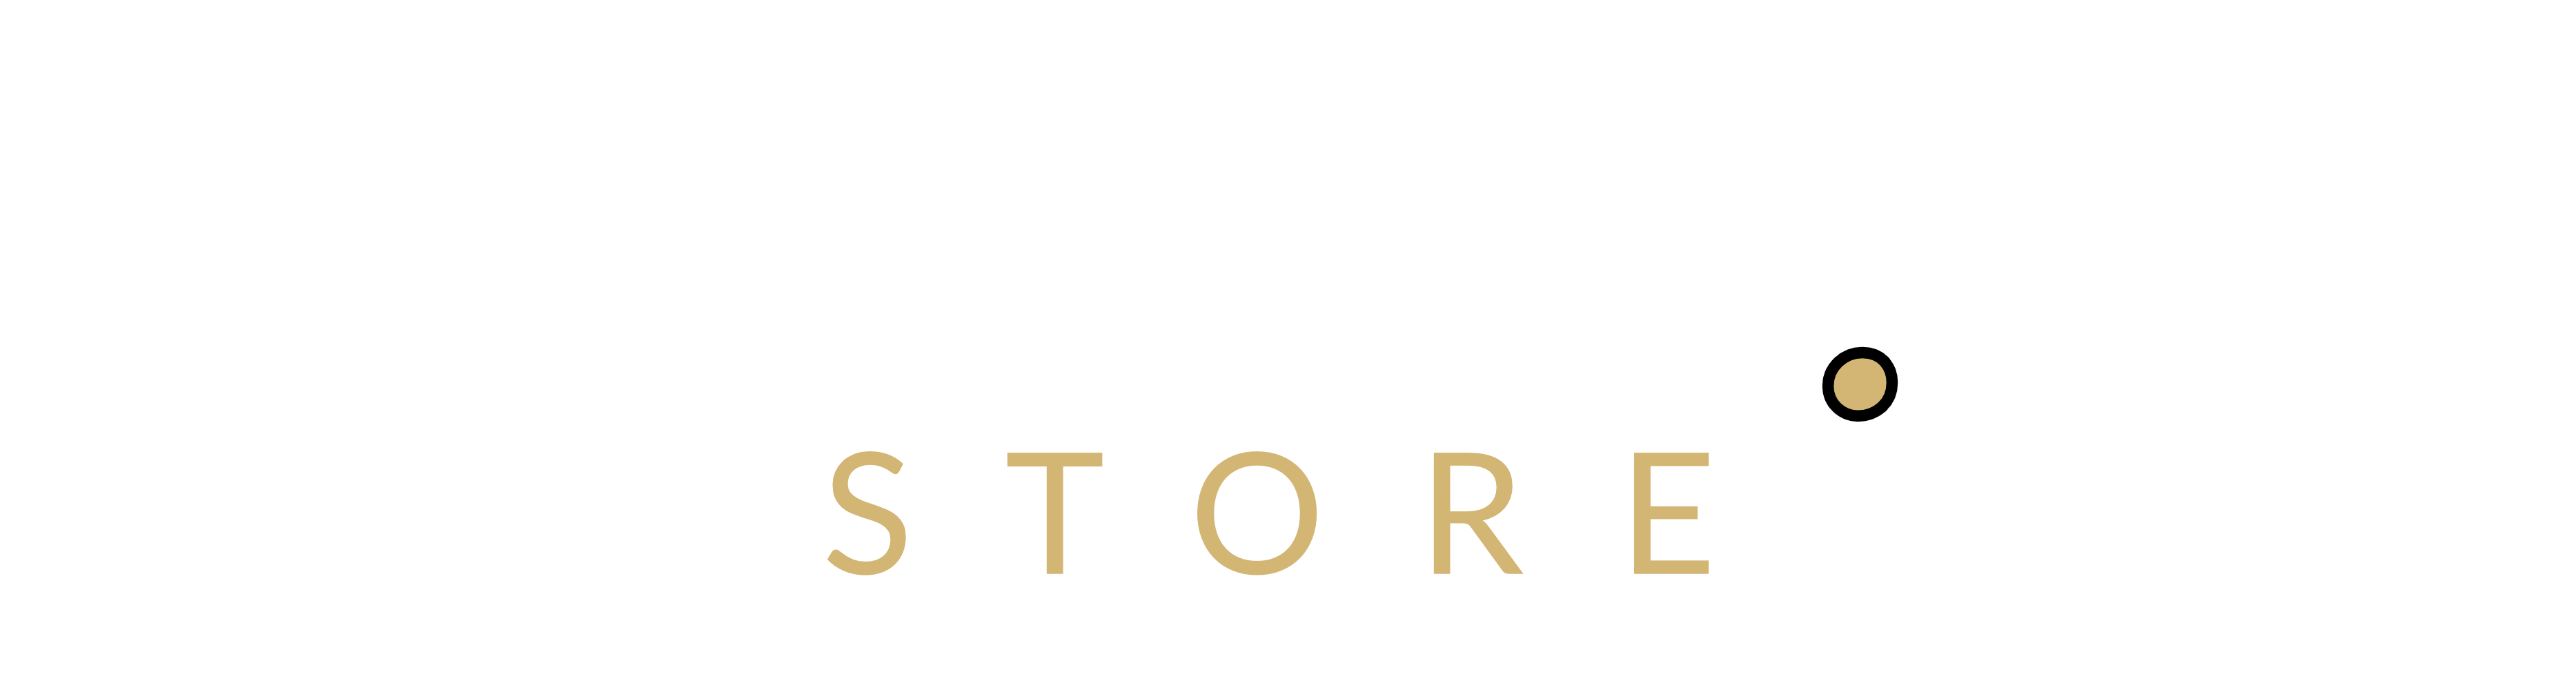 StMichael.com Store